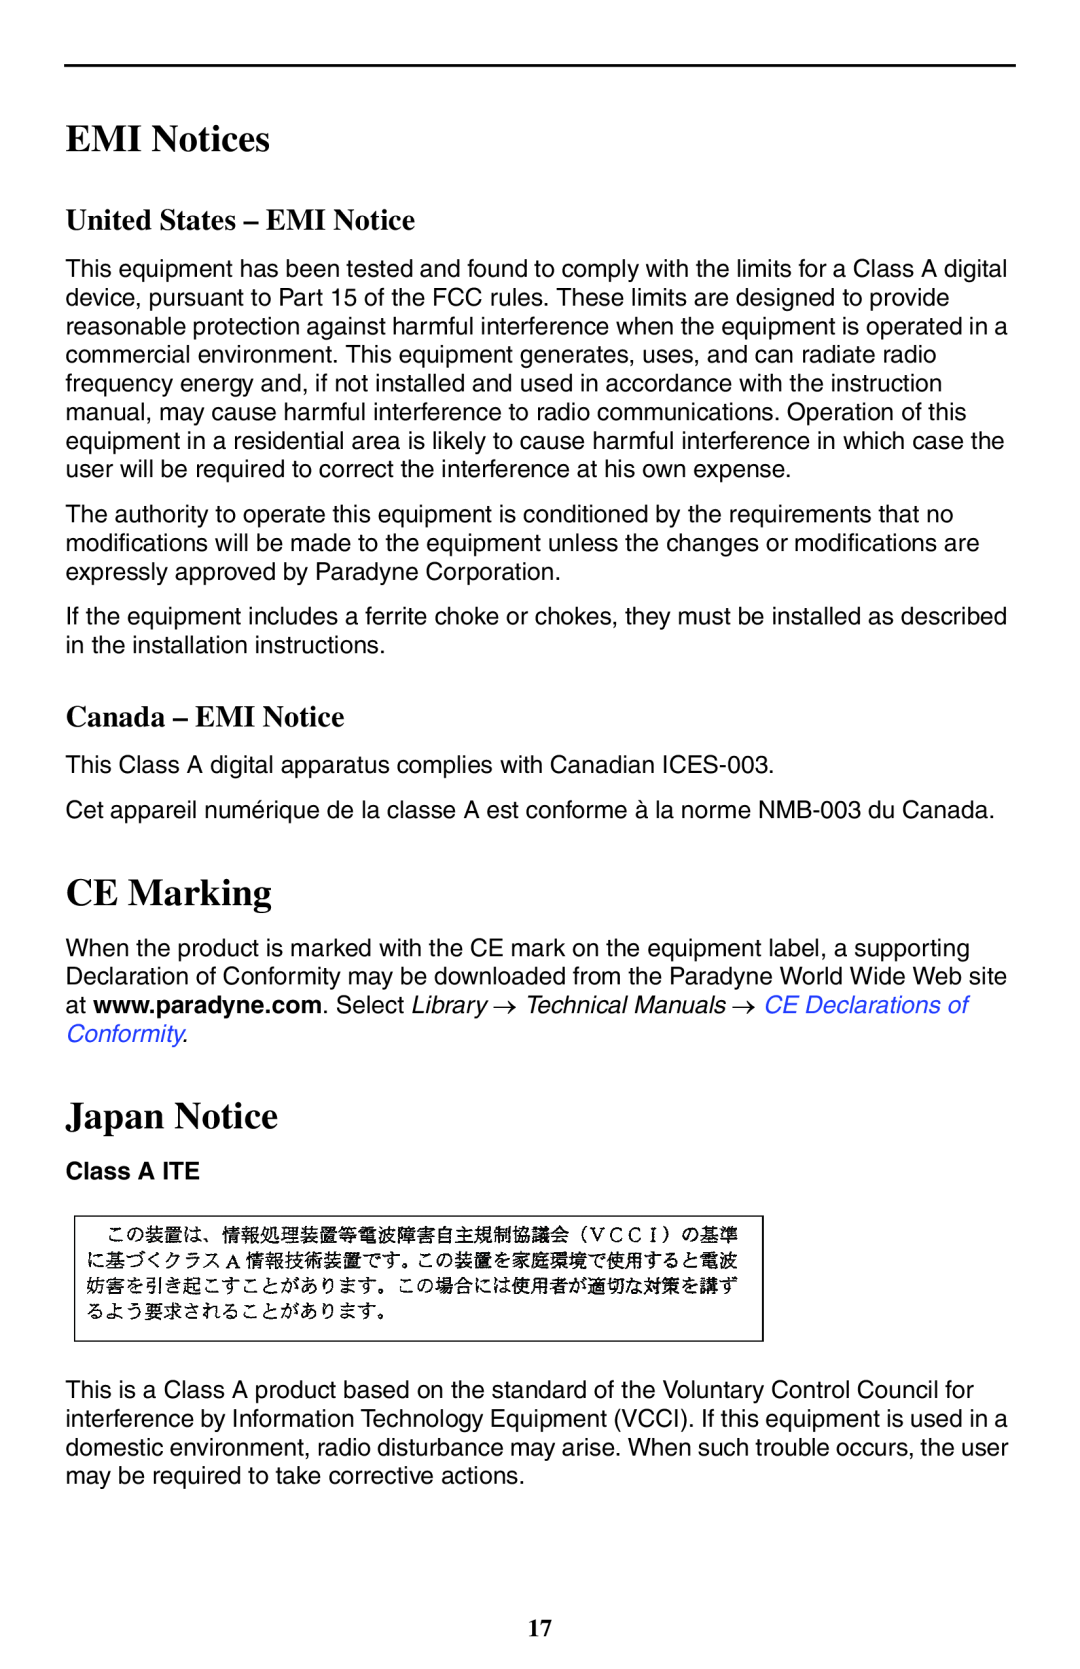 Paradyne 9550 DS3 EMI Notices, CE Marking, Japan Notice, United States - EMI Notice, Canada - EMI Notice 